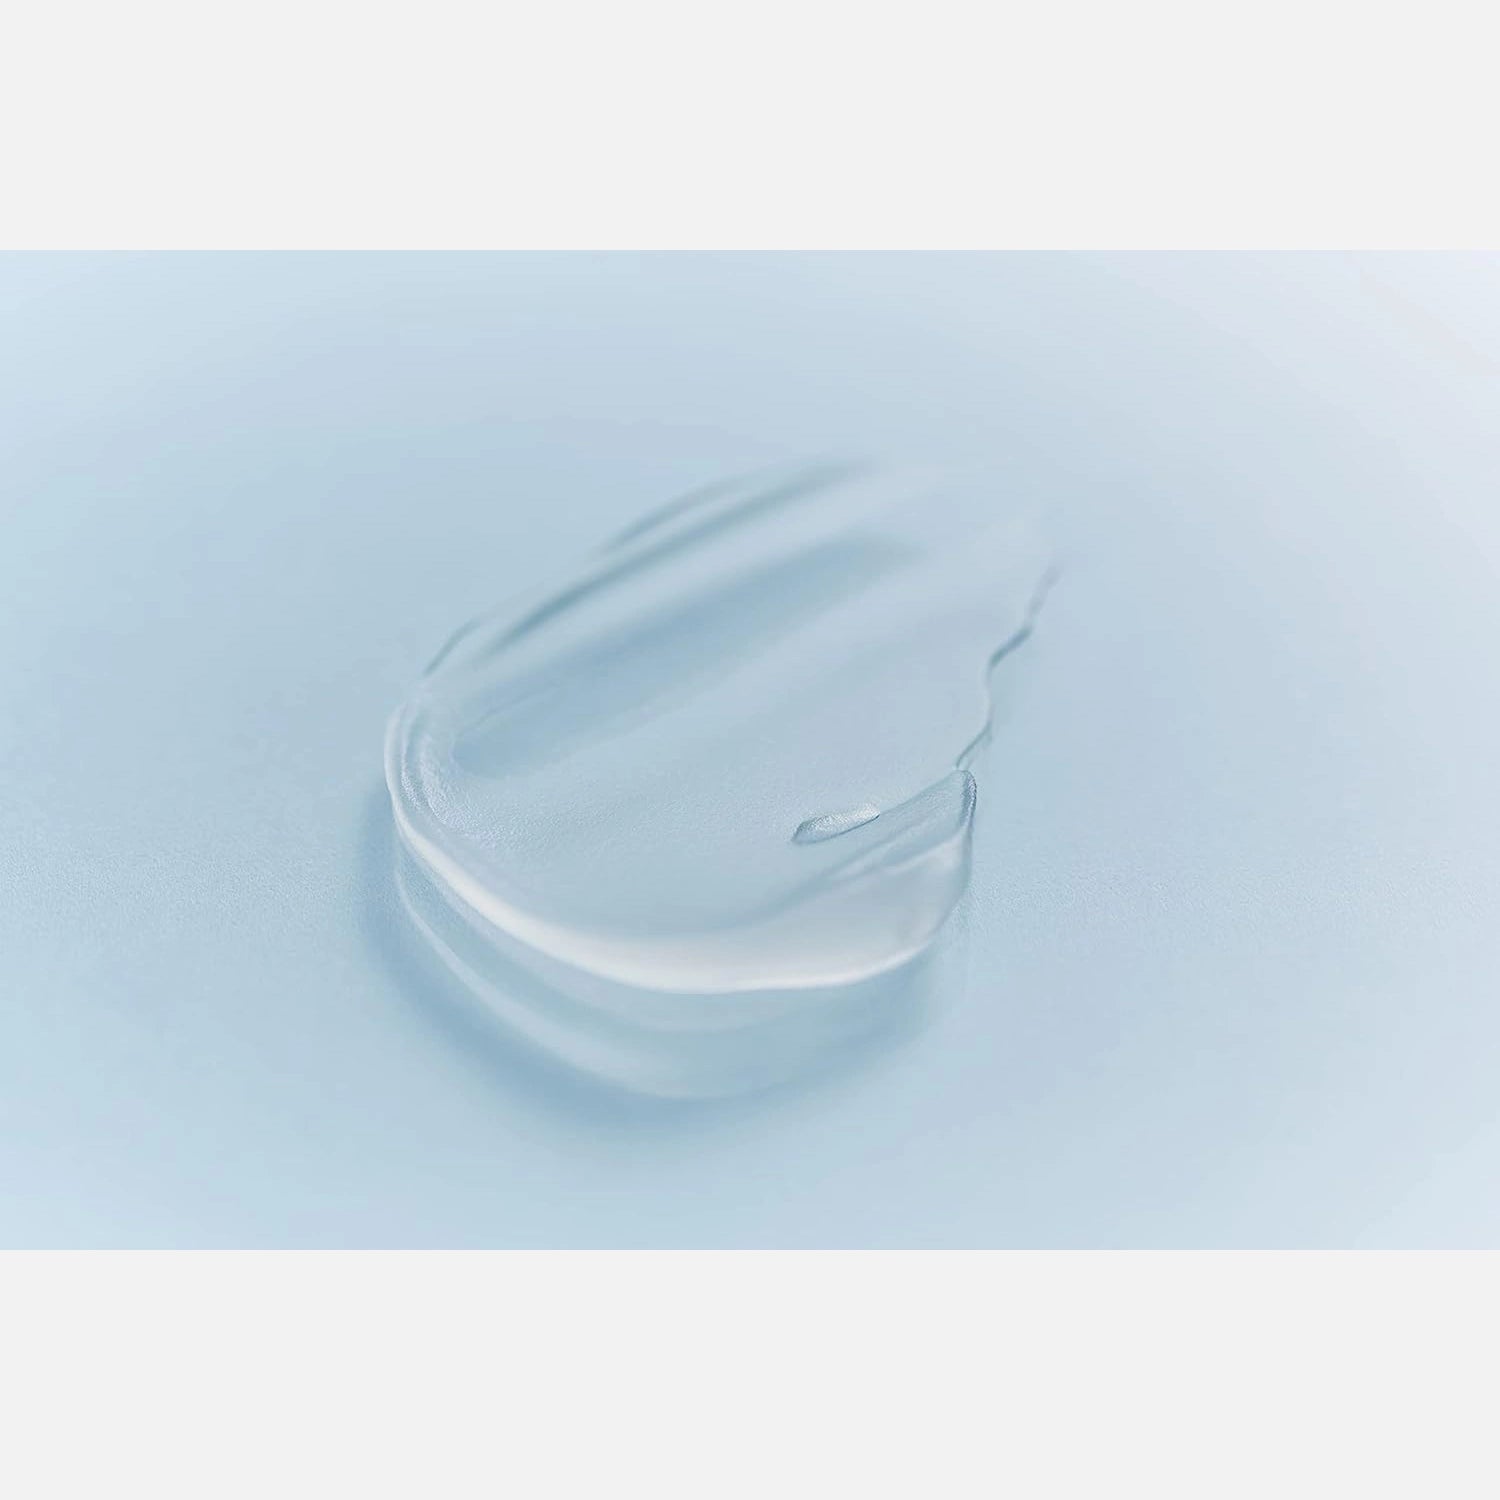 Shiseido AQUALABEL Multi Aqua Balm 100g - Buy Me Japan